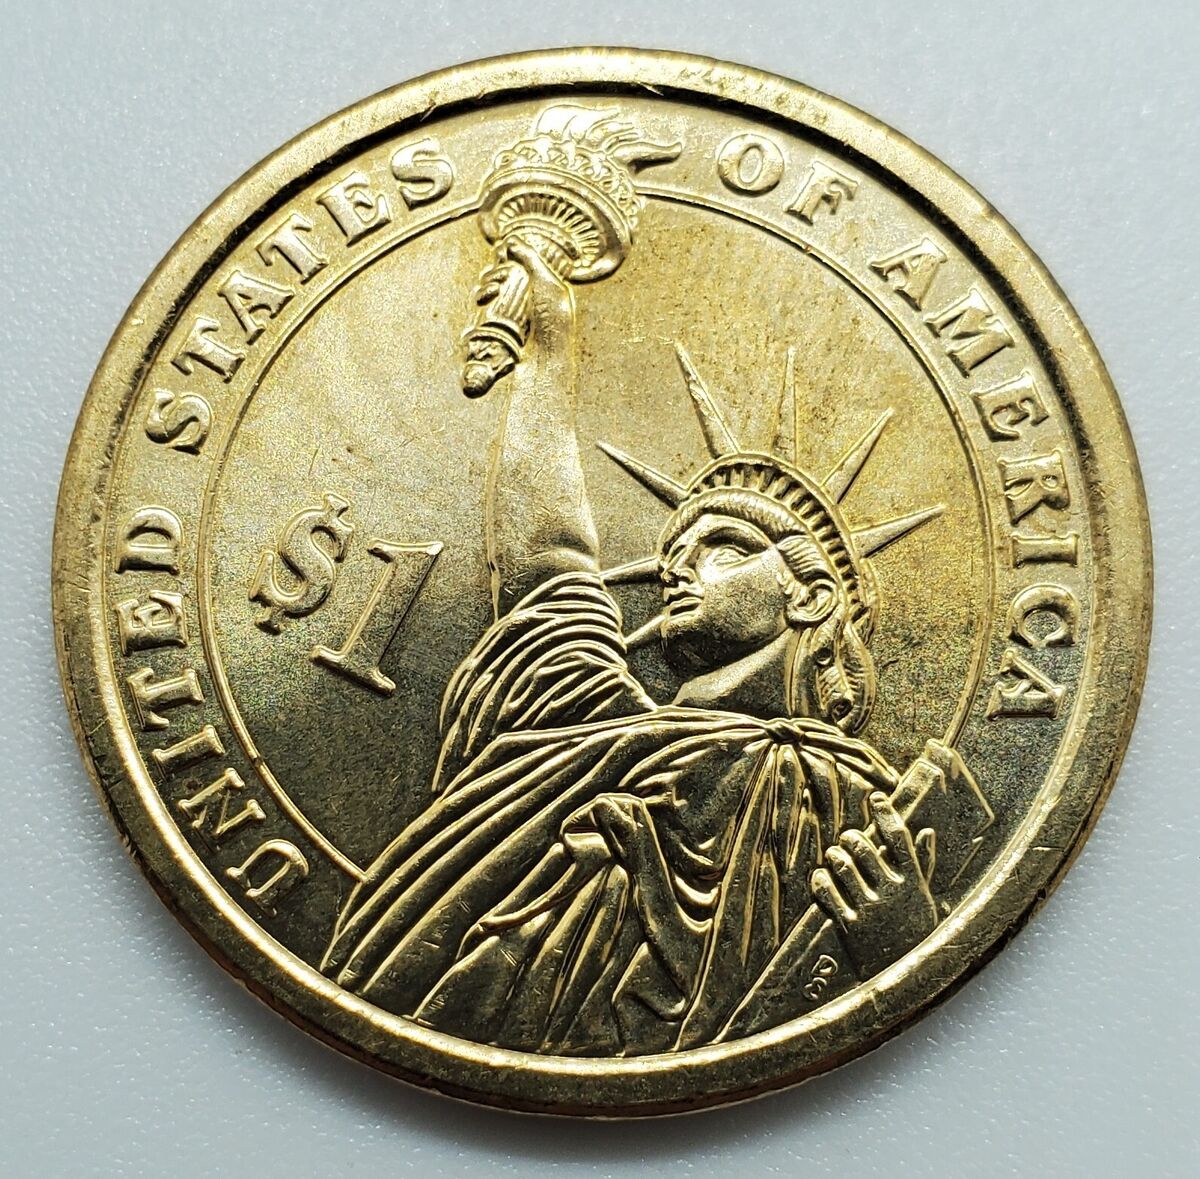 2010 D Abraham Lincoln Dollar Uncirculated $1 US Coin #1 | eBay